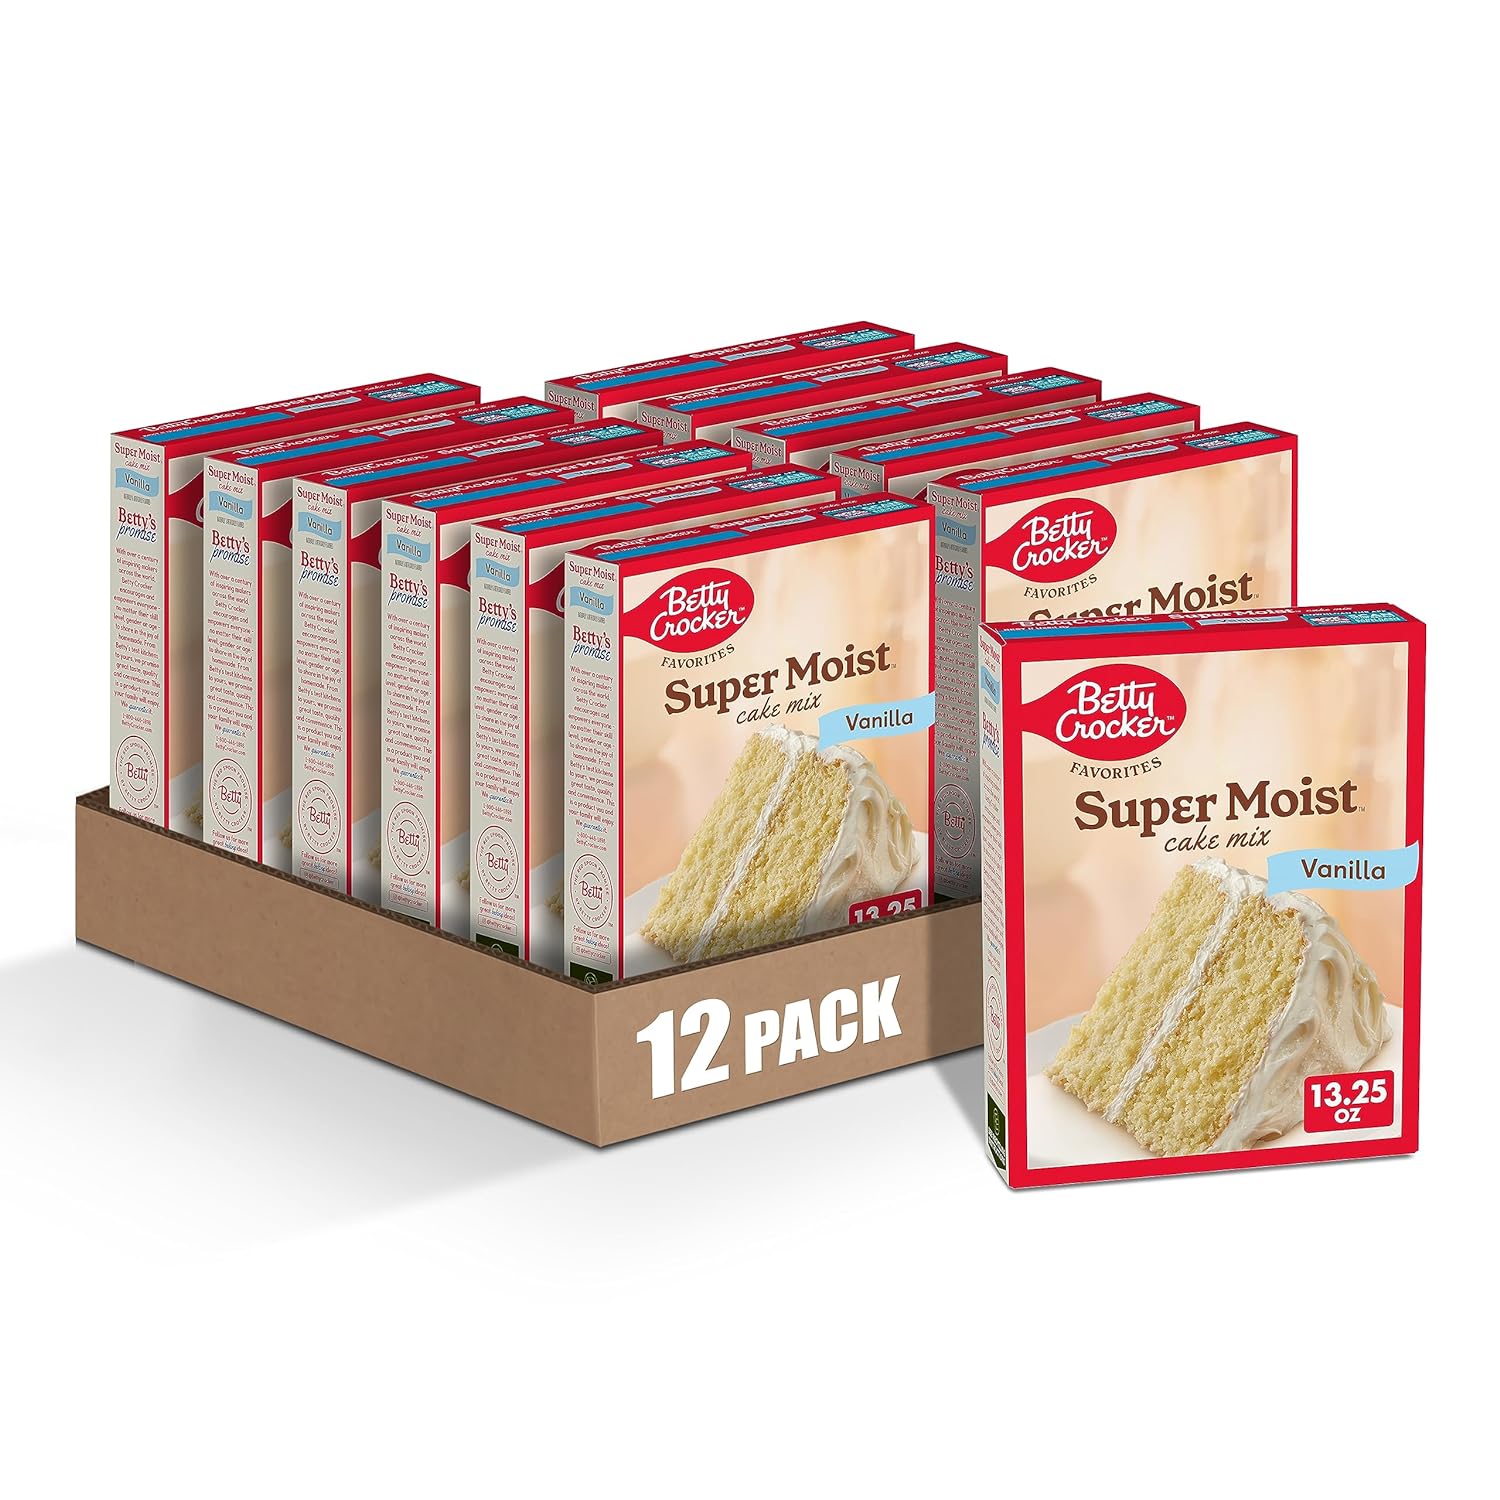 Betty Crocker Favorites Super Moist Vanilla Flavored Cake Mix, 13.25 oz (Pack of 12)